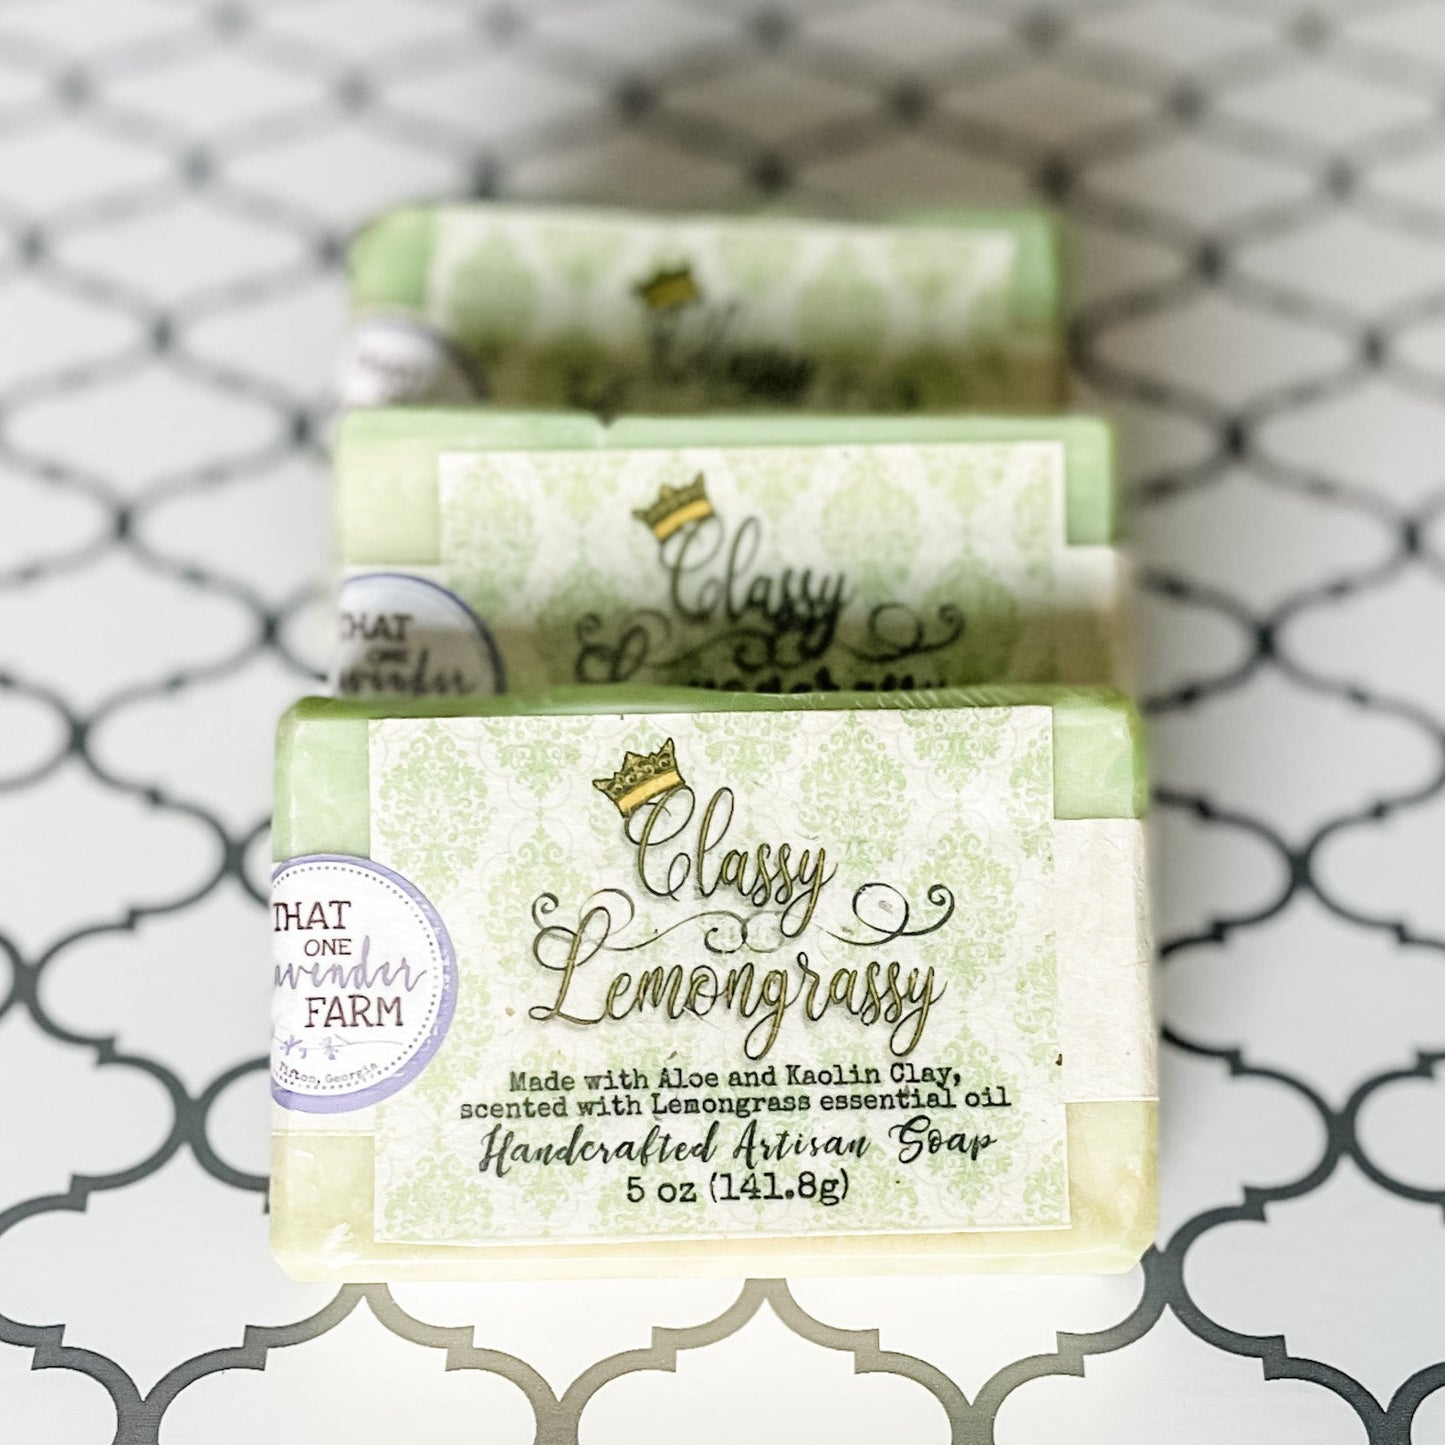 Classy Lemongrassy Handcrafted Artisan Soap (7177387638961)